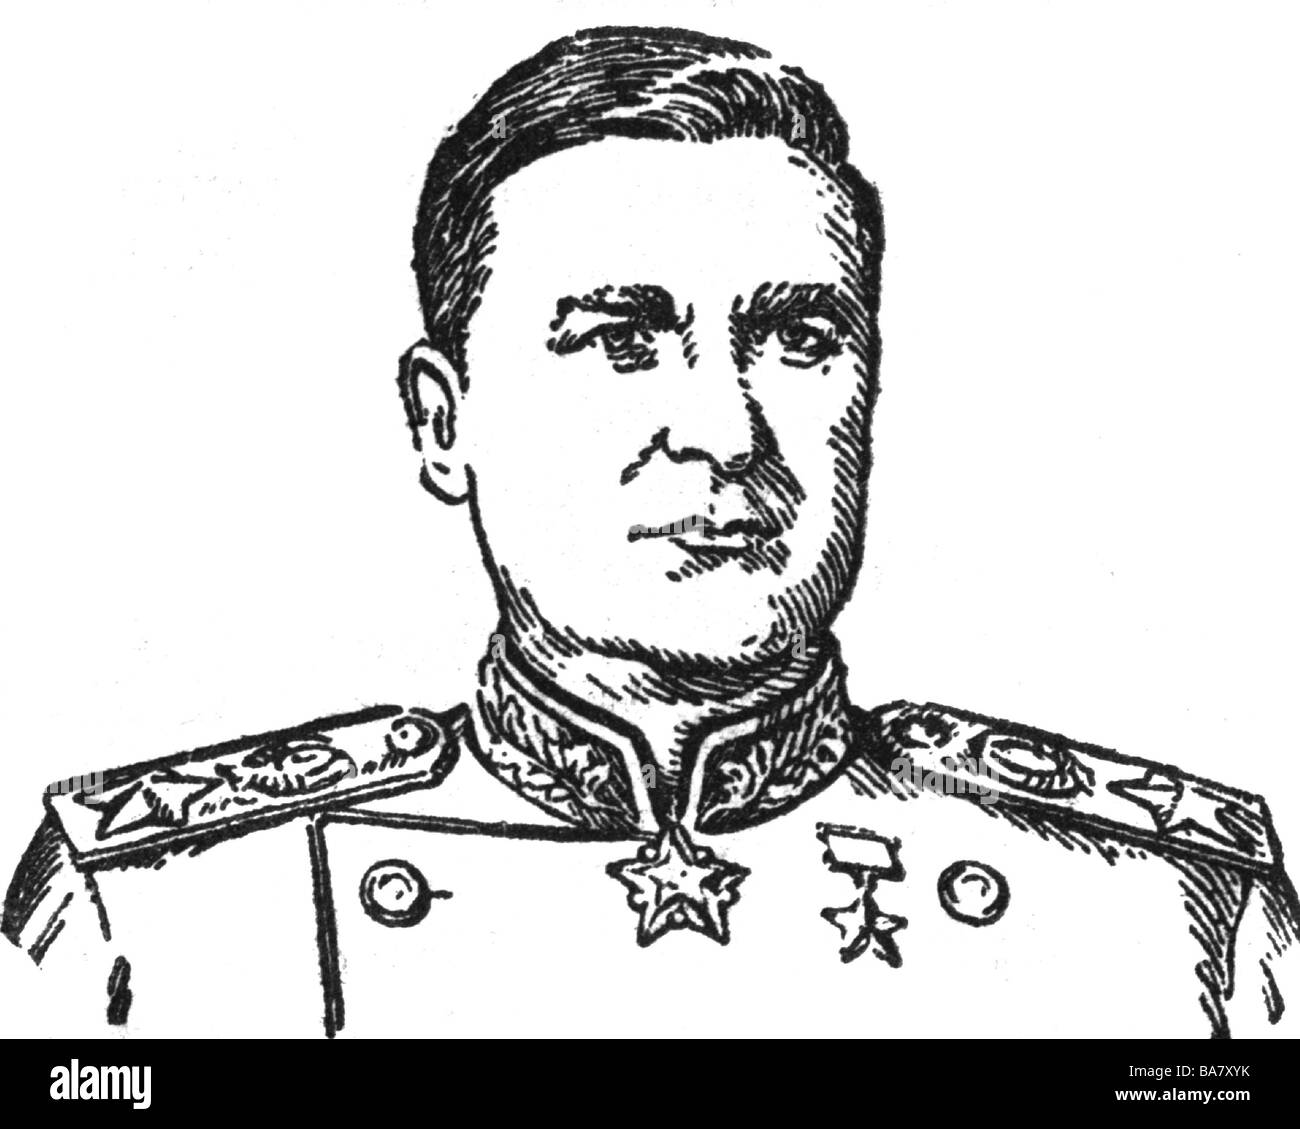 Sokolovsky, Vasily Danilovich, 21.7.1897 - 10.5.1968, Soviet General, Marshal of the Soviet Union, portrait, drawing, 1950s, Stock Photo